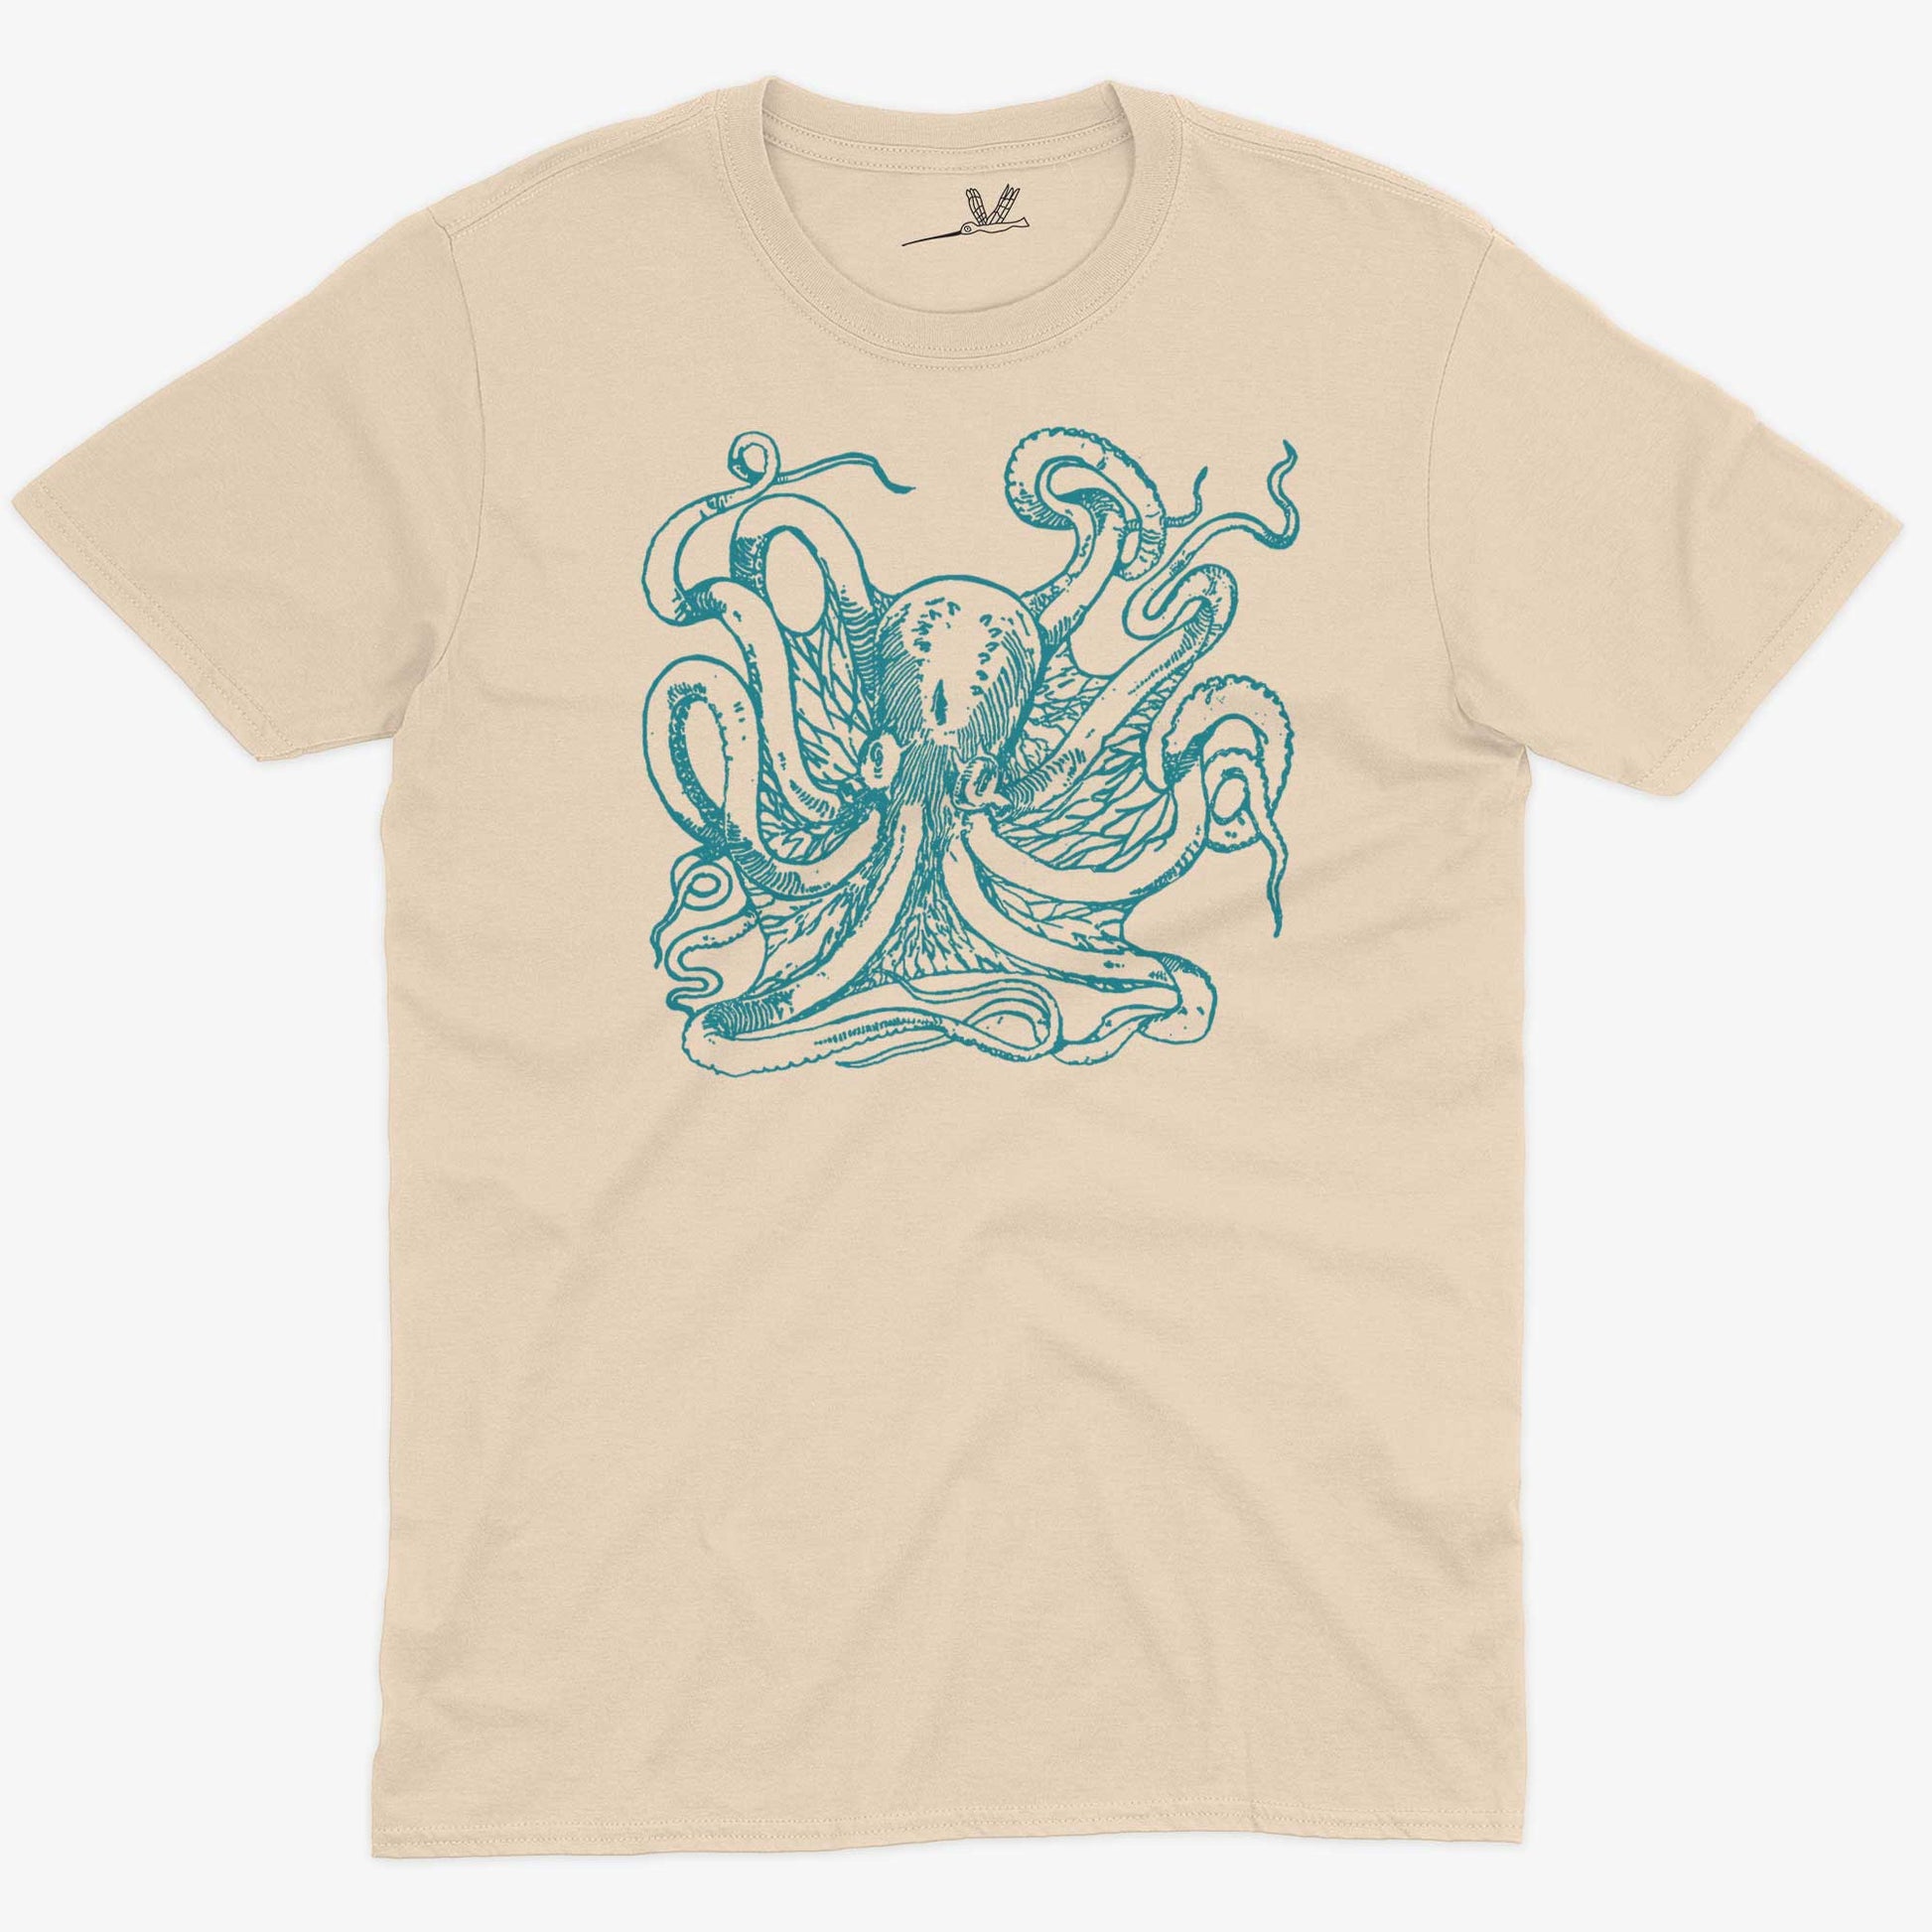 Giant Octopus Unisex Or Women's Cotton T-shirt-Organic Natural-Unisex